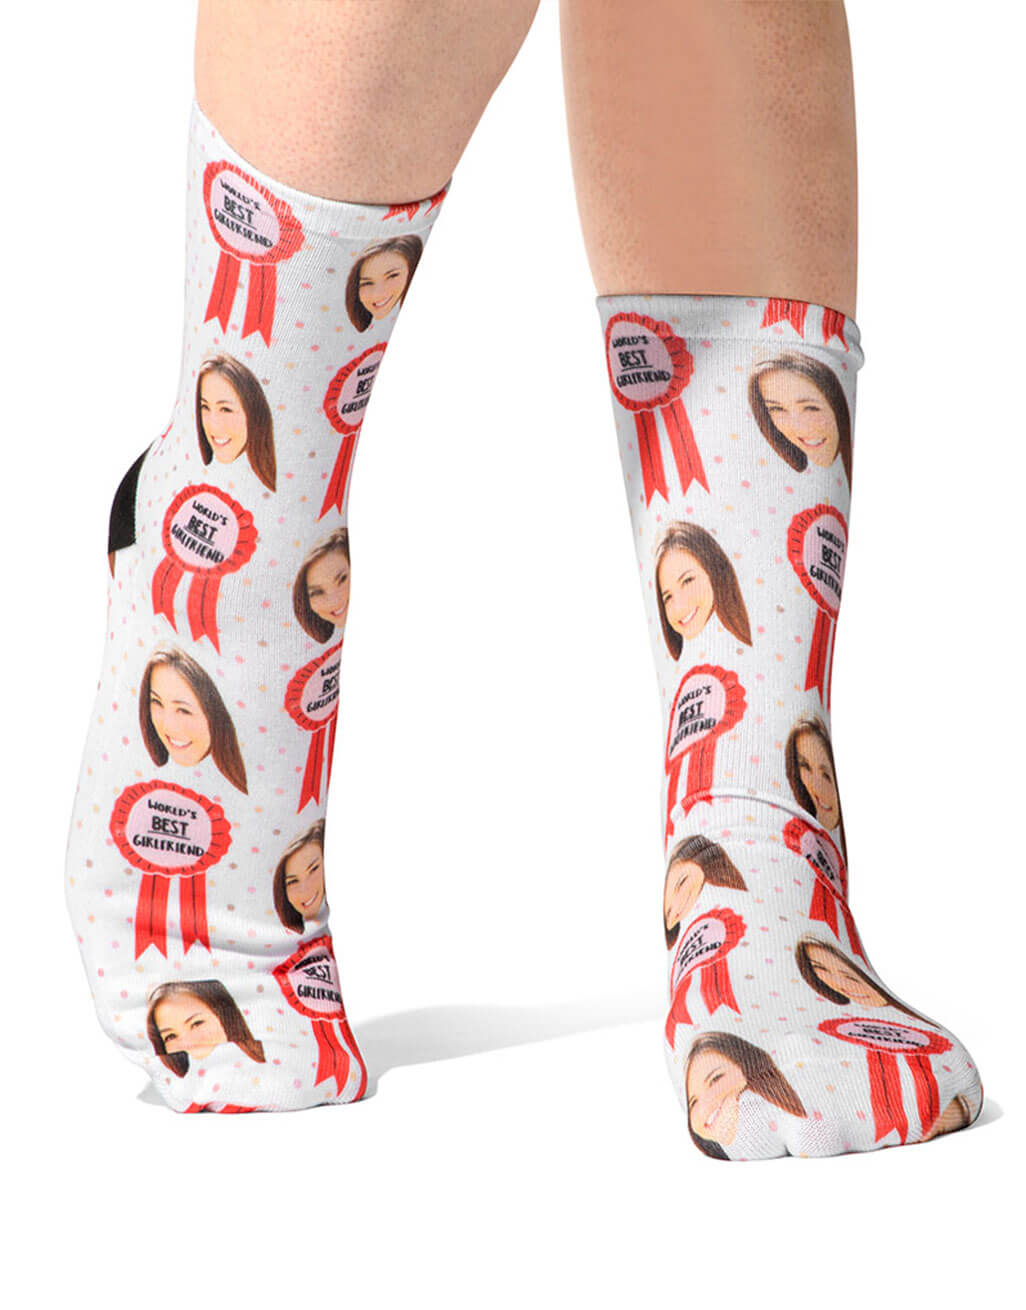 I Love My Girlfriend Socks - Custom Girlfriend Socks – Super Socks